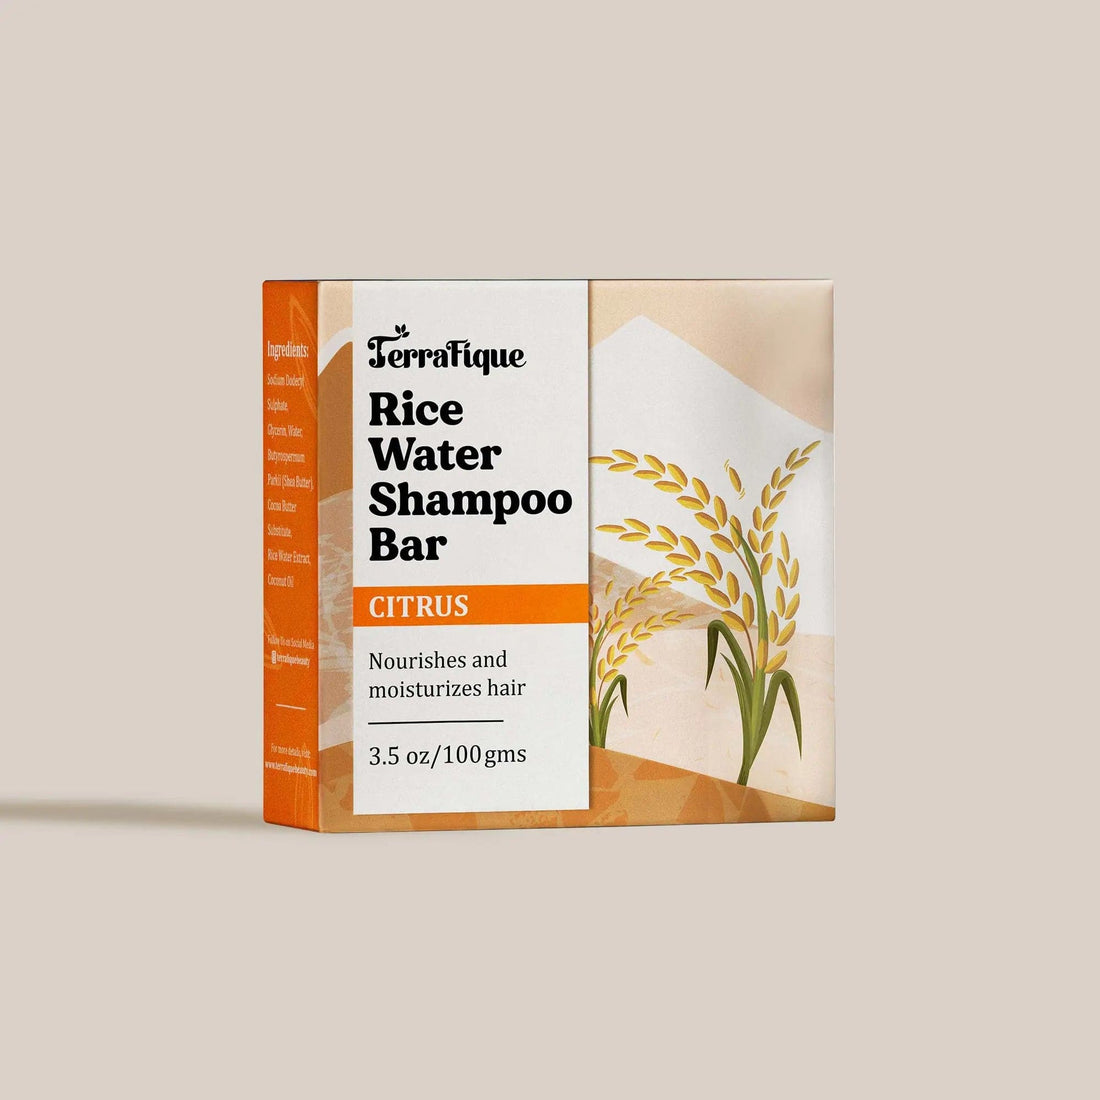 terrafique rice water shampoo bar box